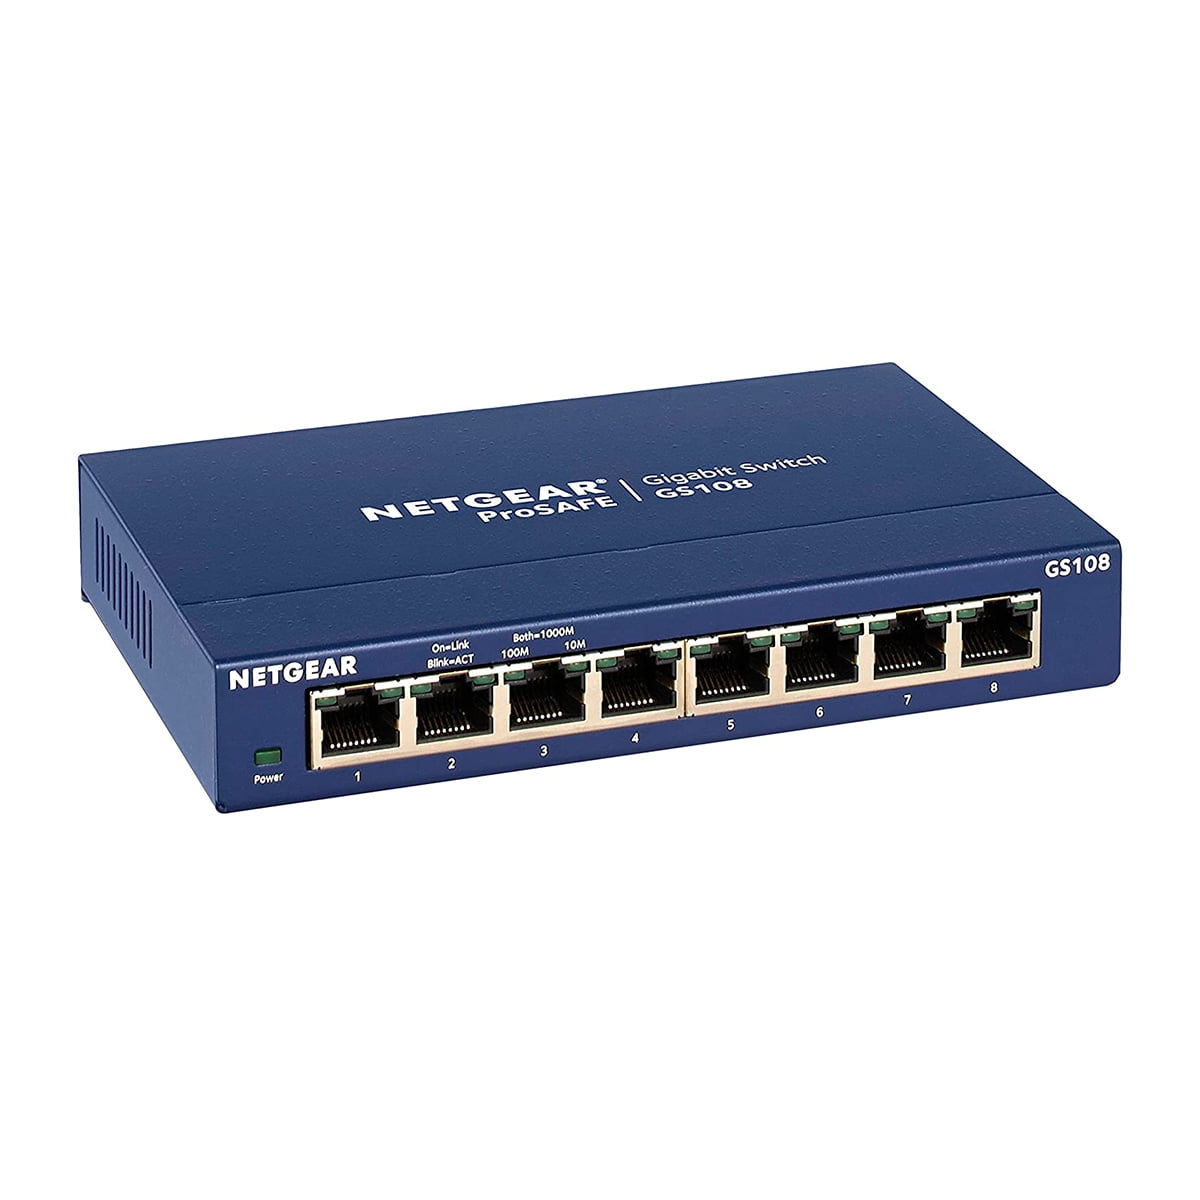 MokerLink Store - 18-Port Gigabit Ethernet Switch witch 16-Port PoE